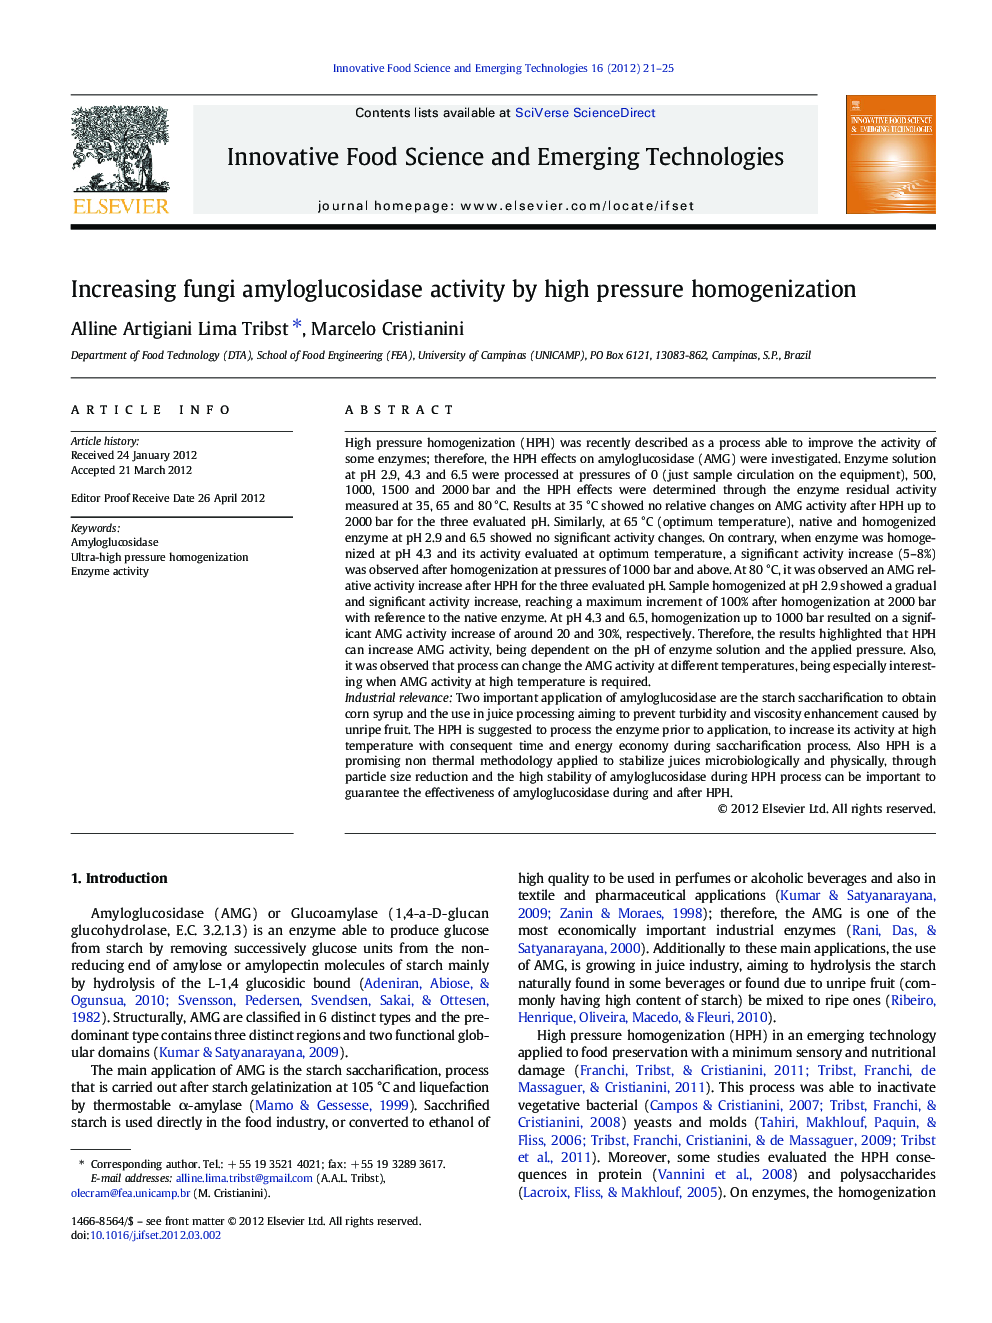 Increasing fungi amyloglucosidase activity by high pressure homogenization